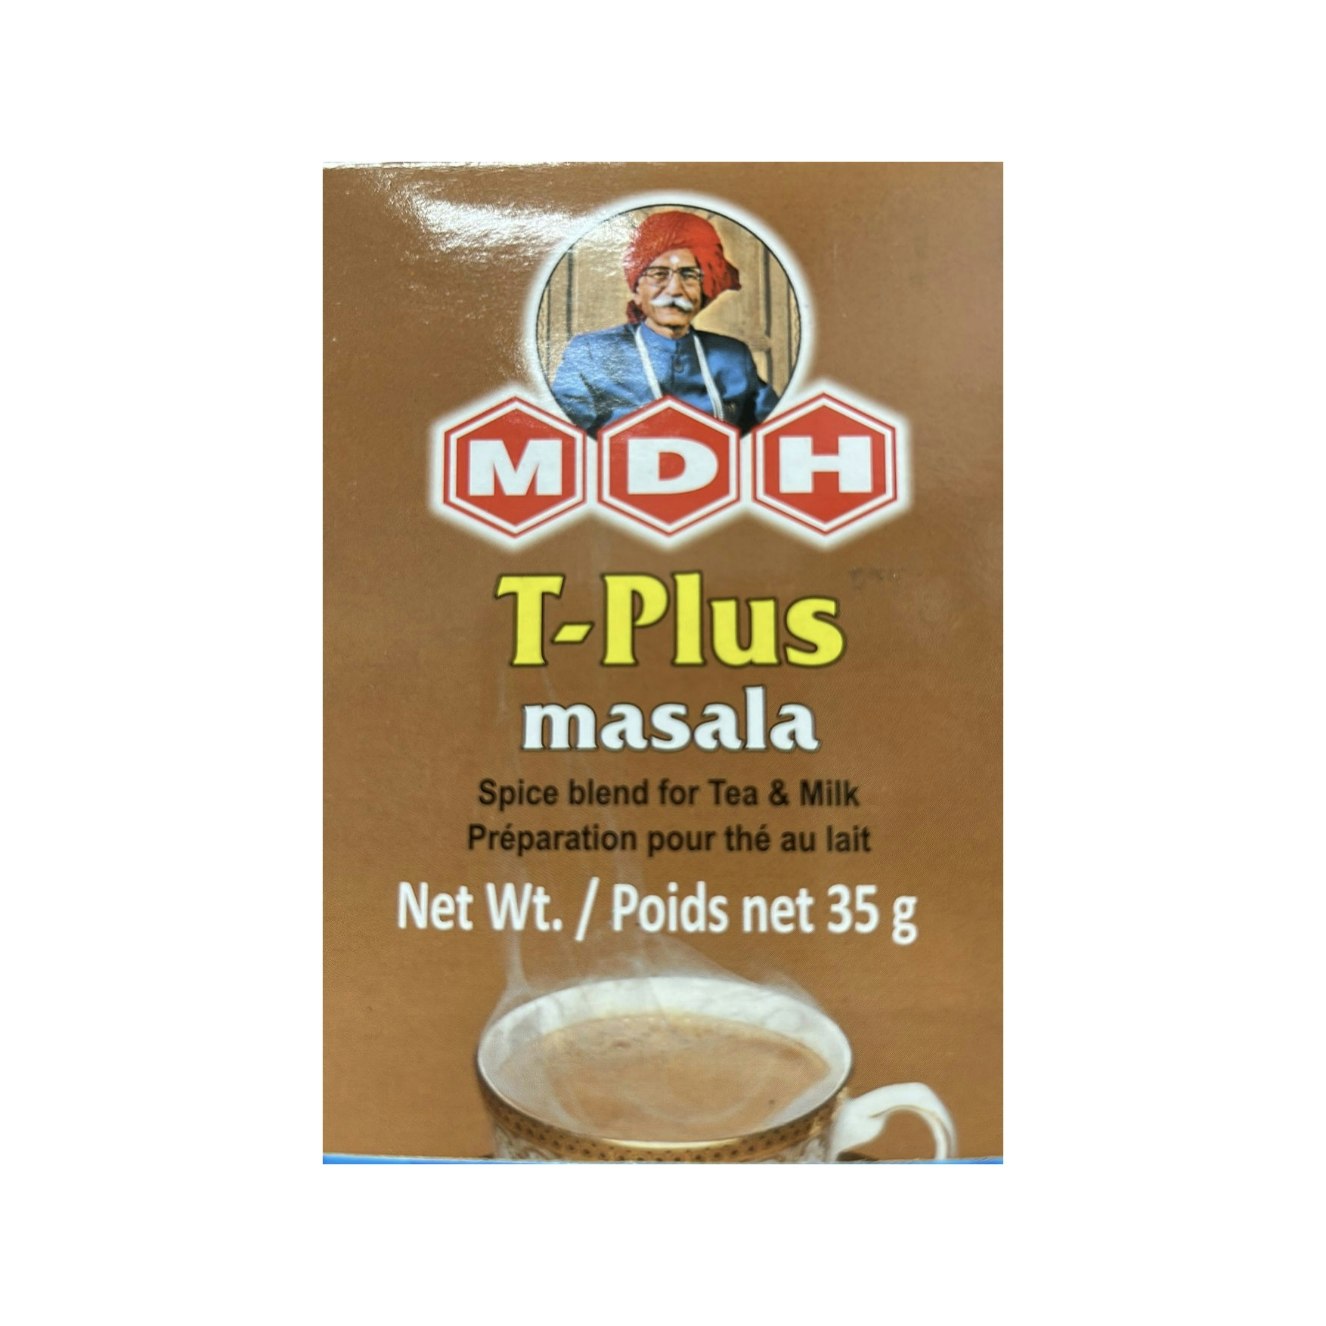 Tea Plus Masala 100 g (MDH)